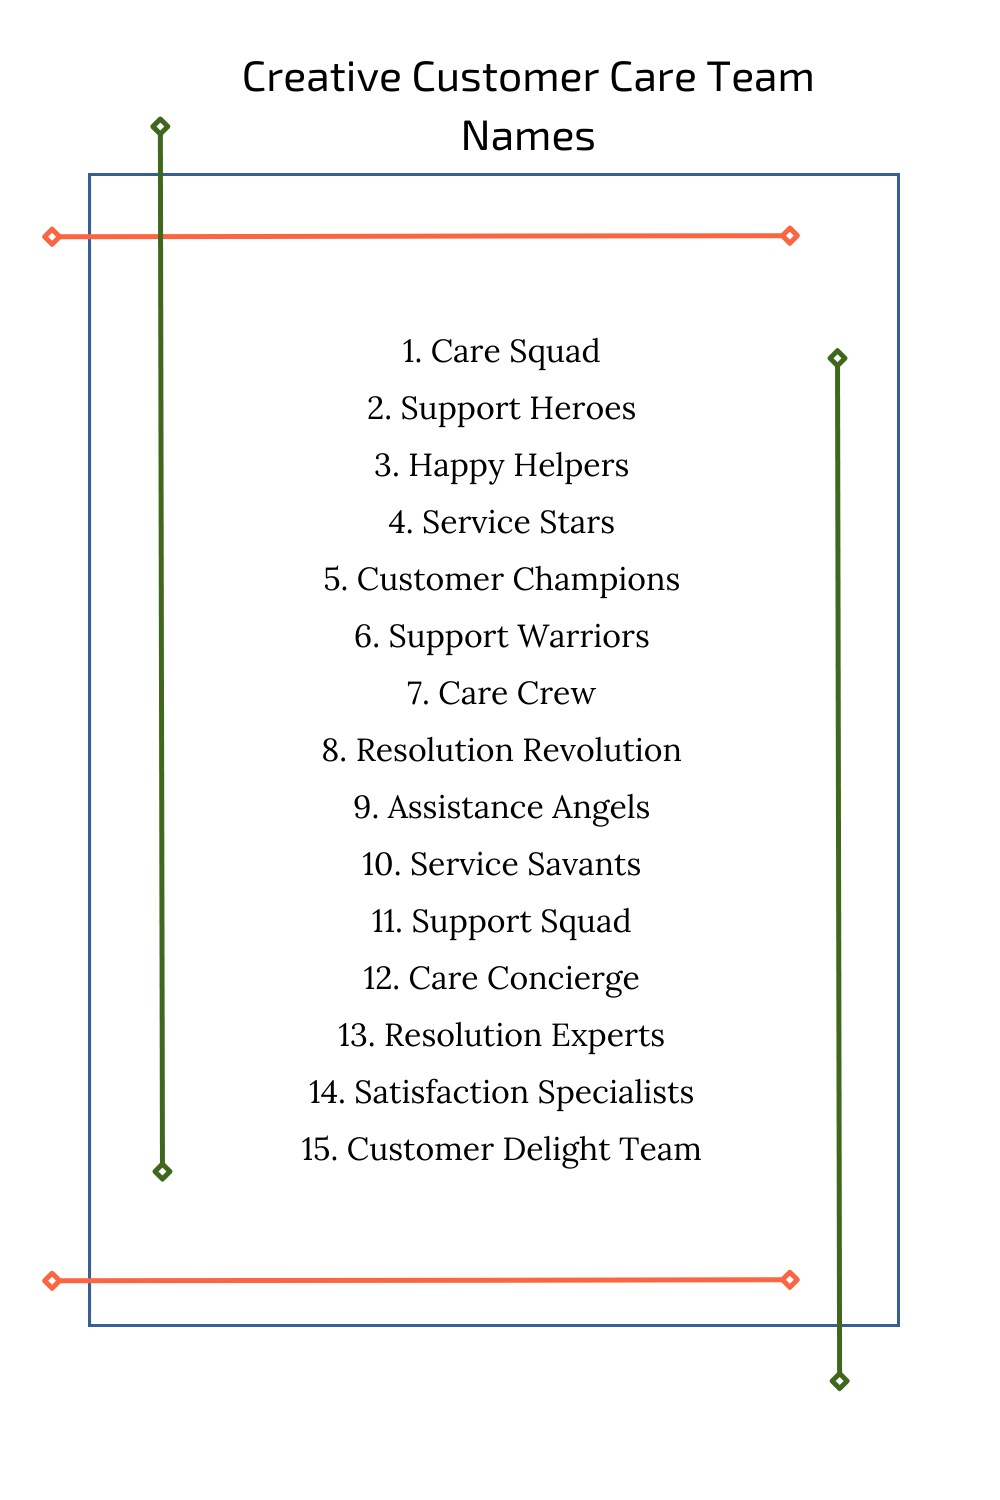 Creative Customer Care Team Names